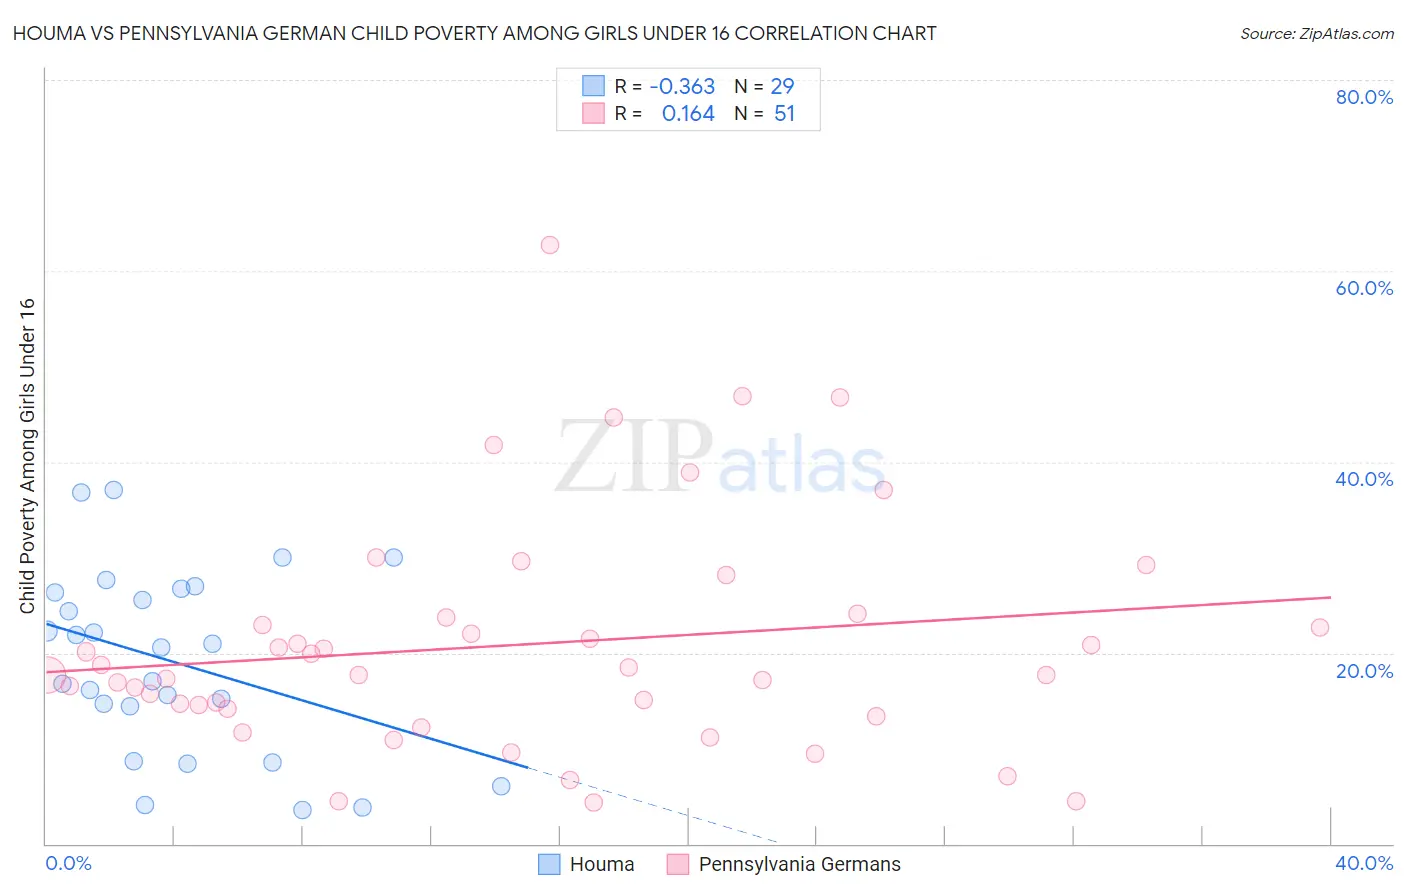 Houma vs Pennsylvania German Child Poverty Among Girls Under 16